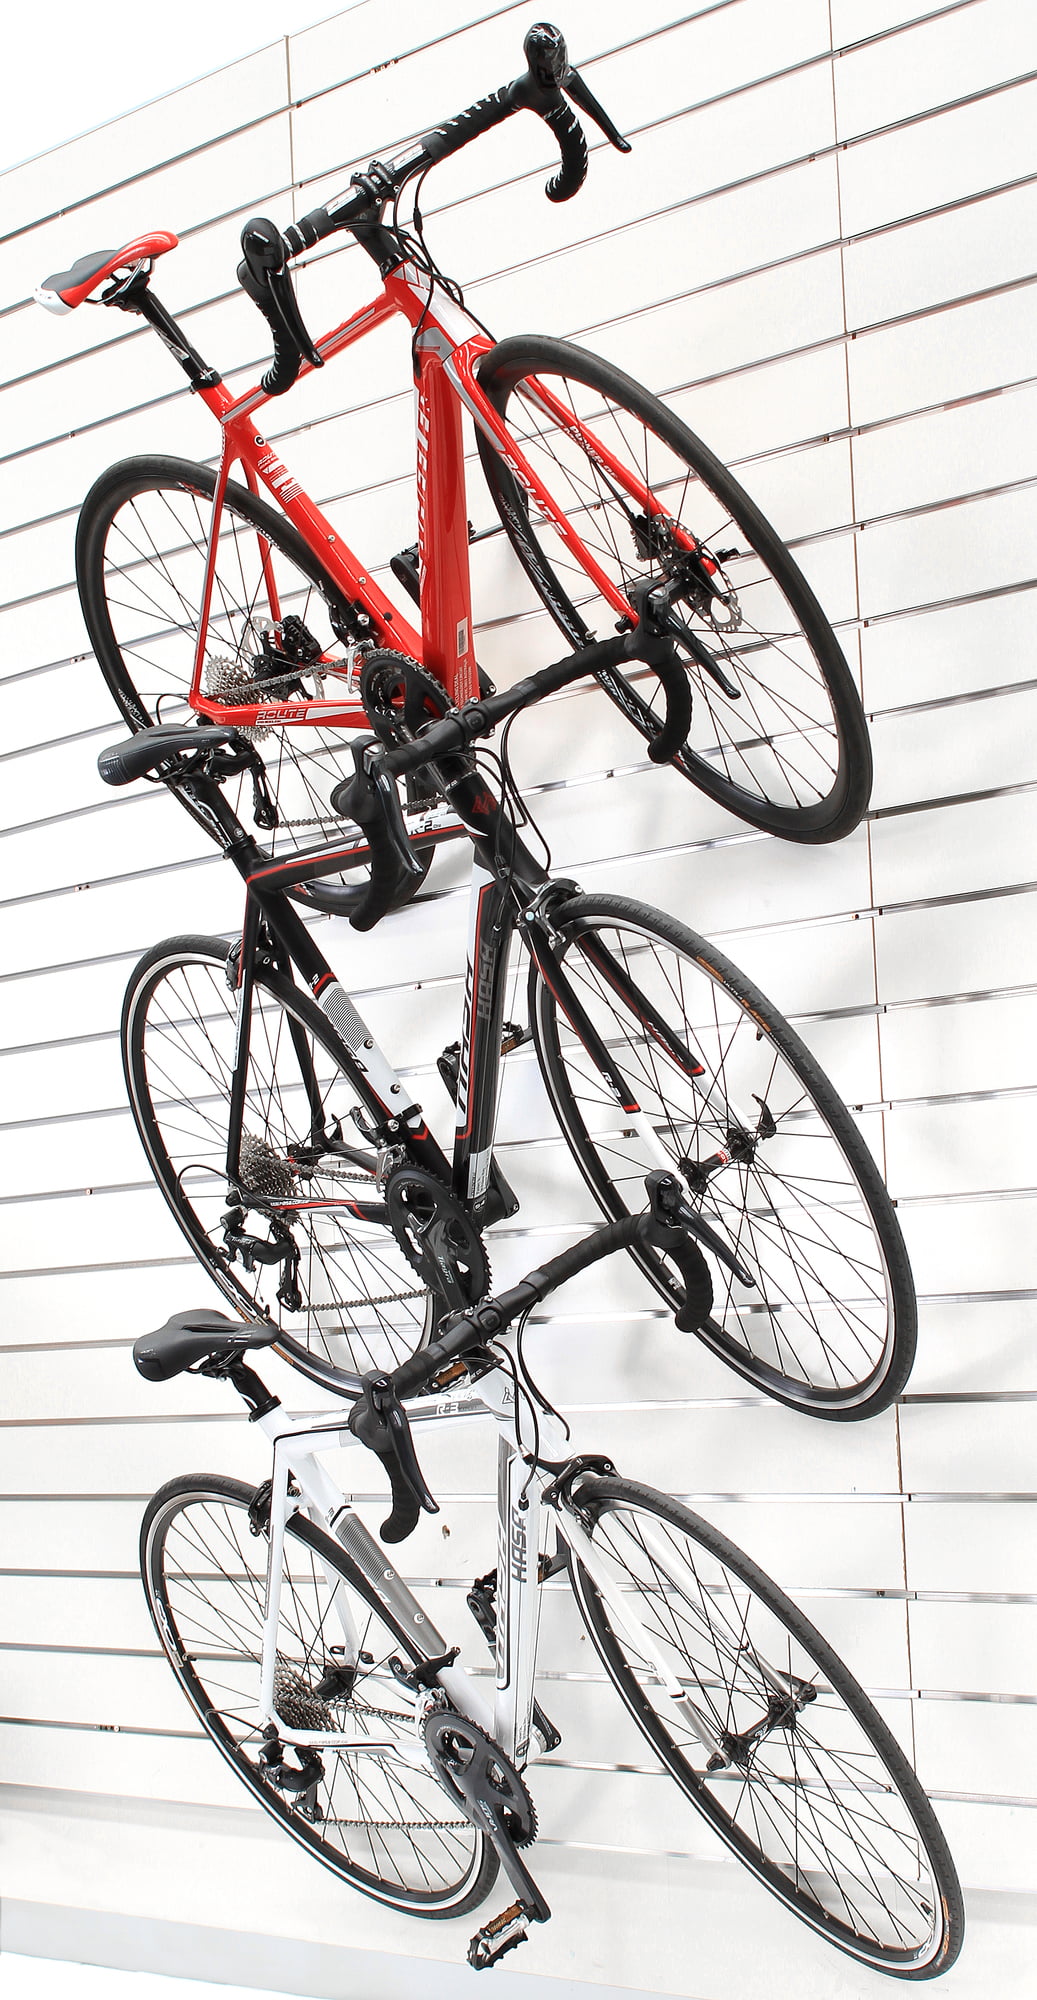 pedal bike rack